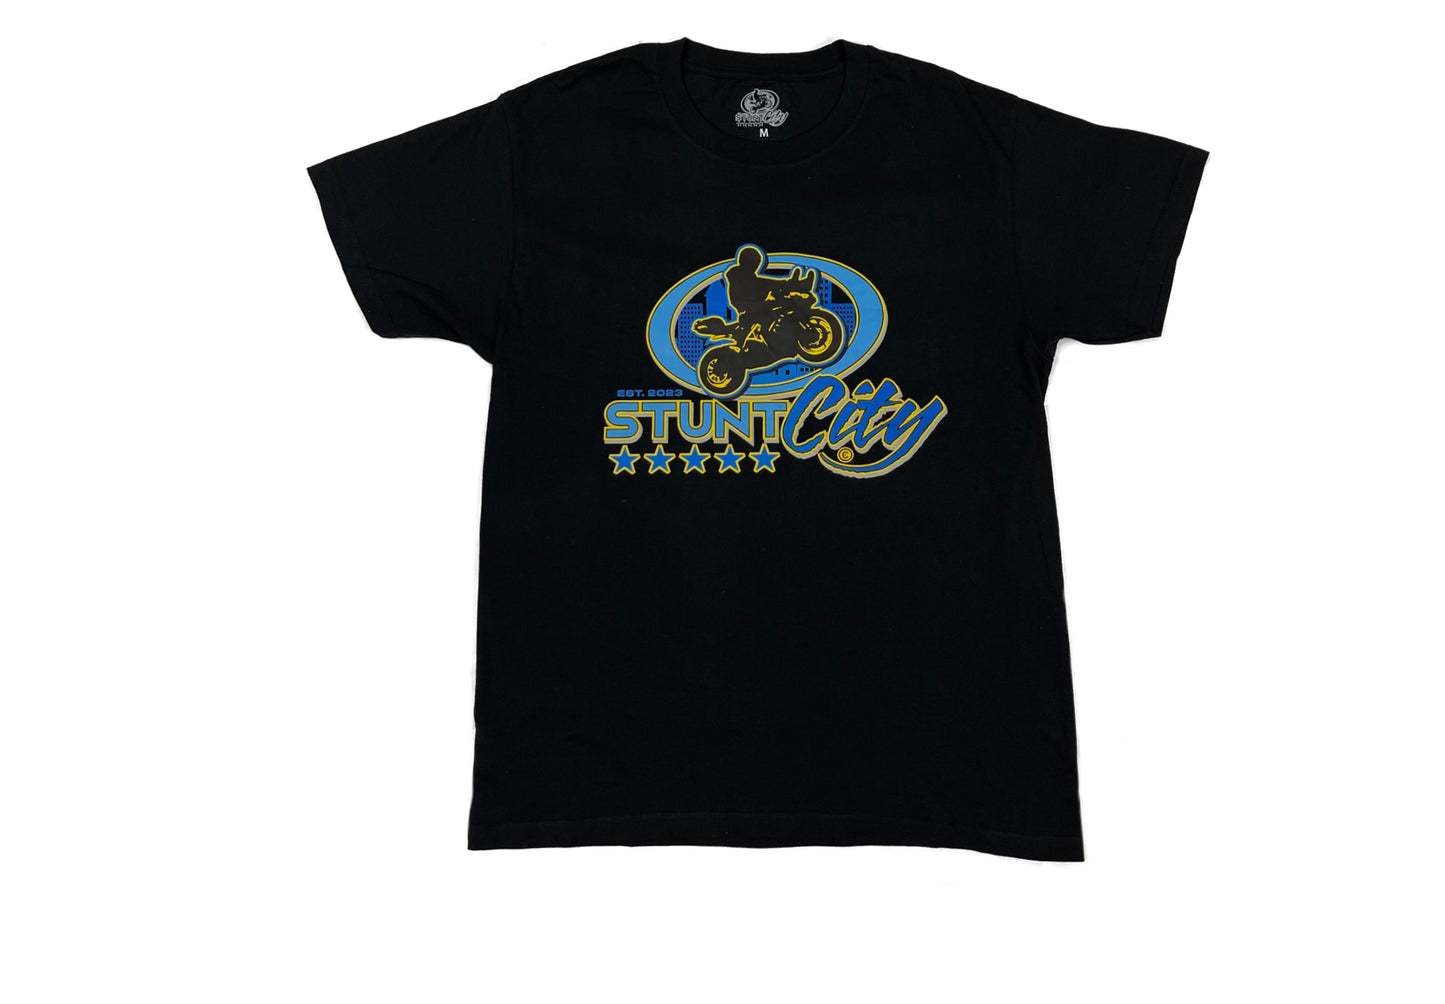 Black t-shirt with blue Stunt City logo